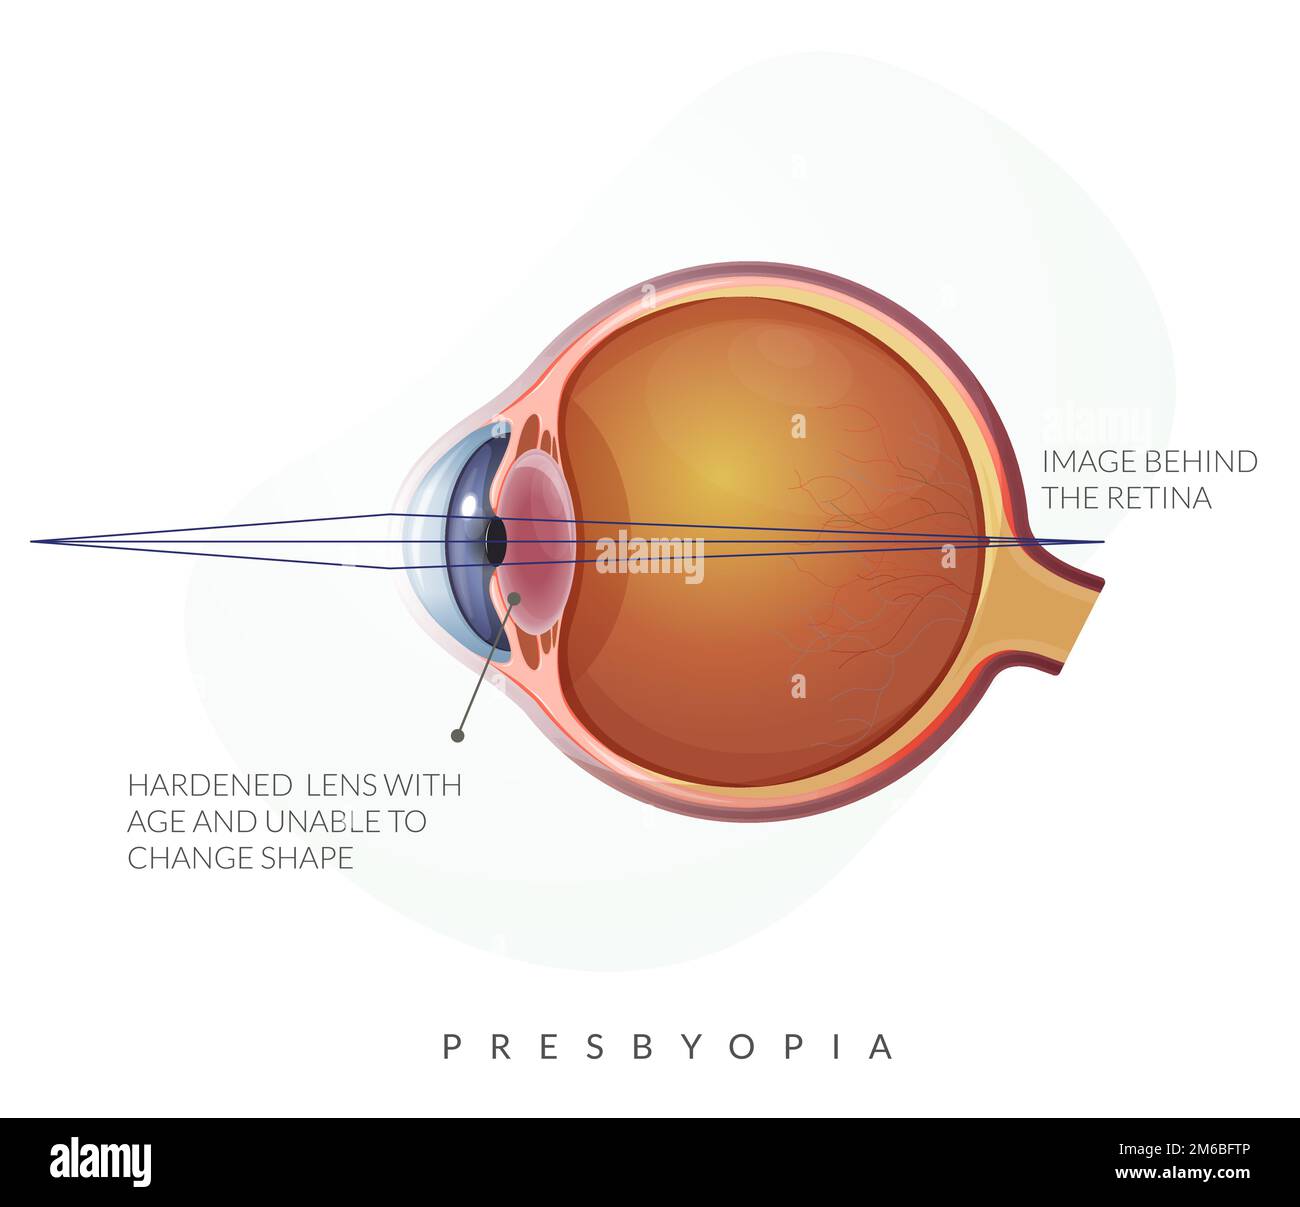 Presbyopia - Human Eye Anatomy - Stock Illustration as EPS 10 File Stock Vector